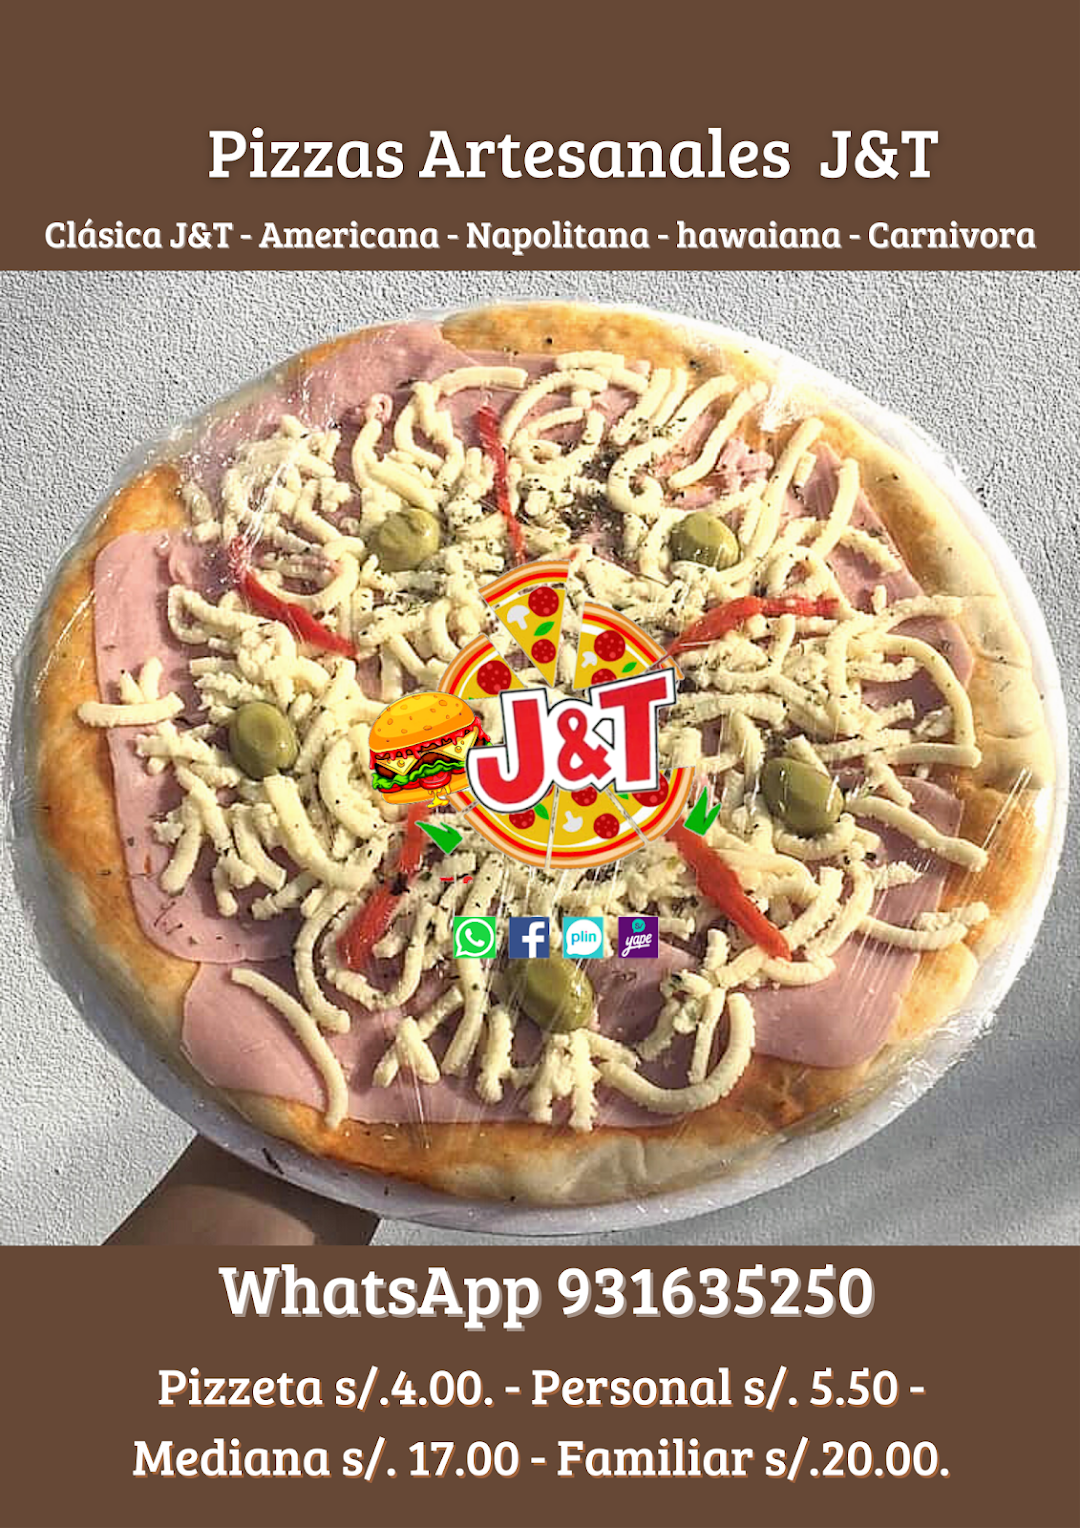 J&T Pizzas y Hamburguesas Artesanales